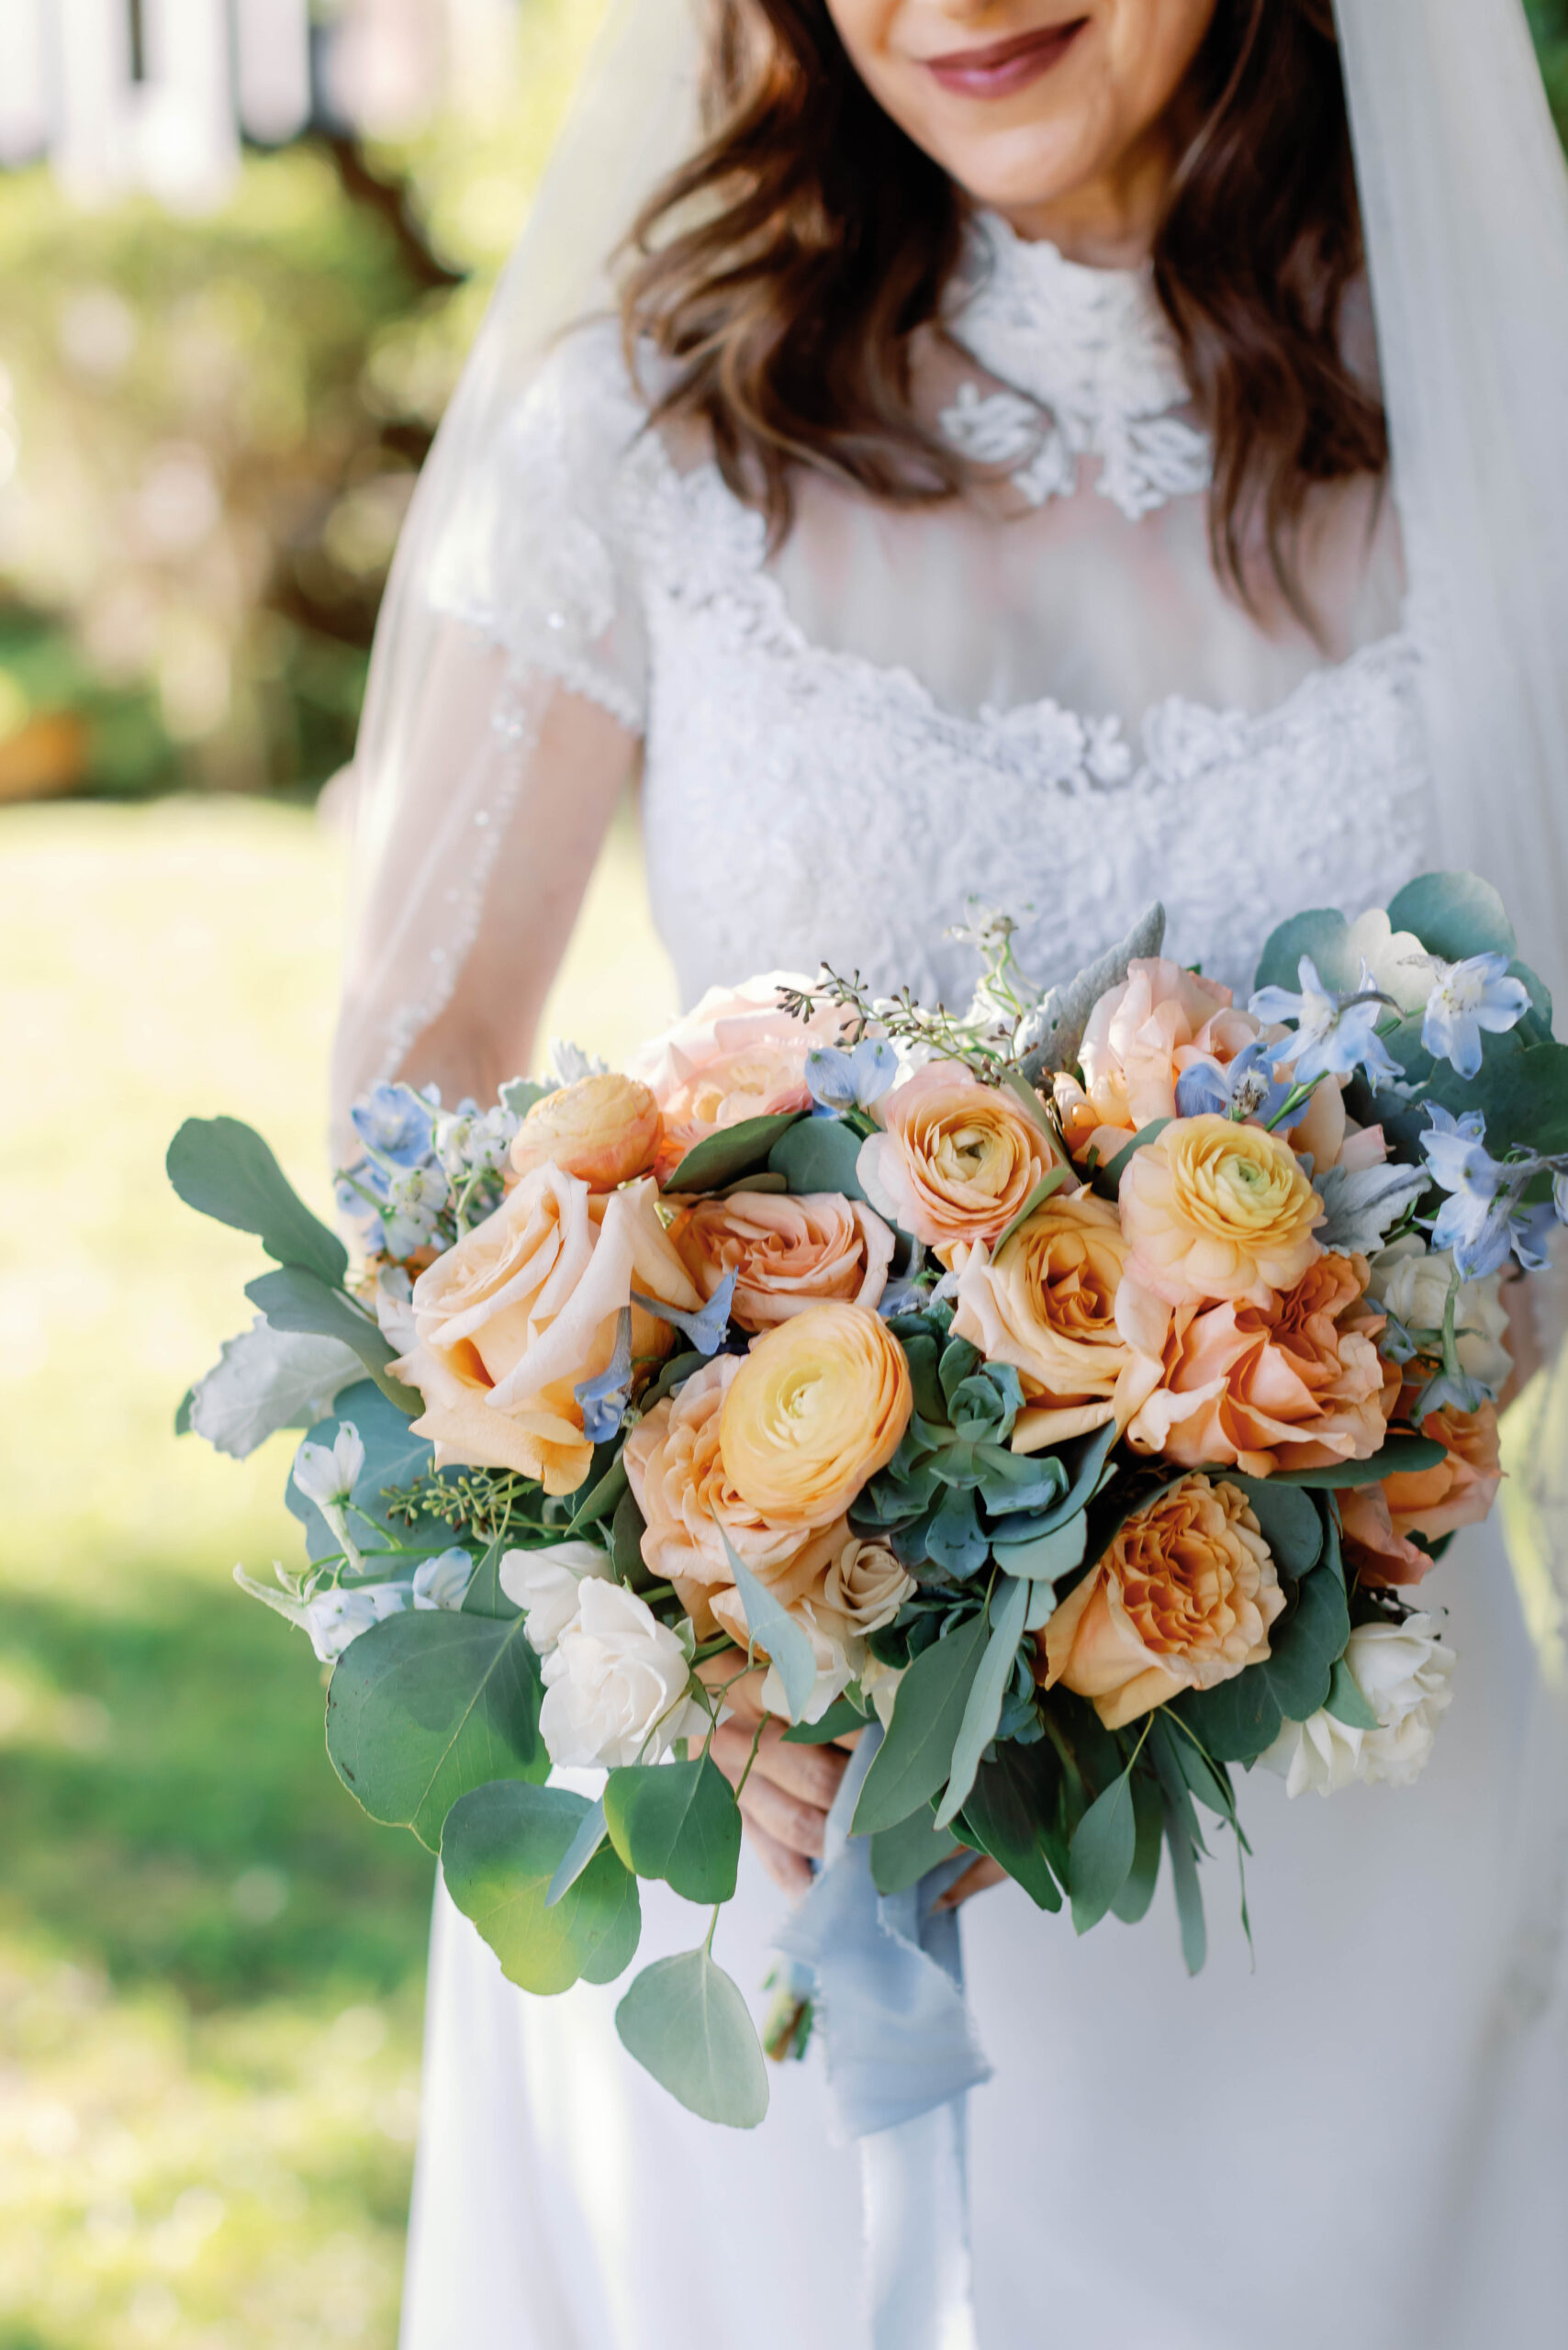 Closeup of brides bouquet | Photo by Sarah Block Photography